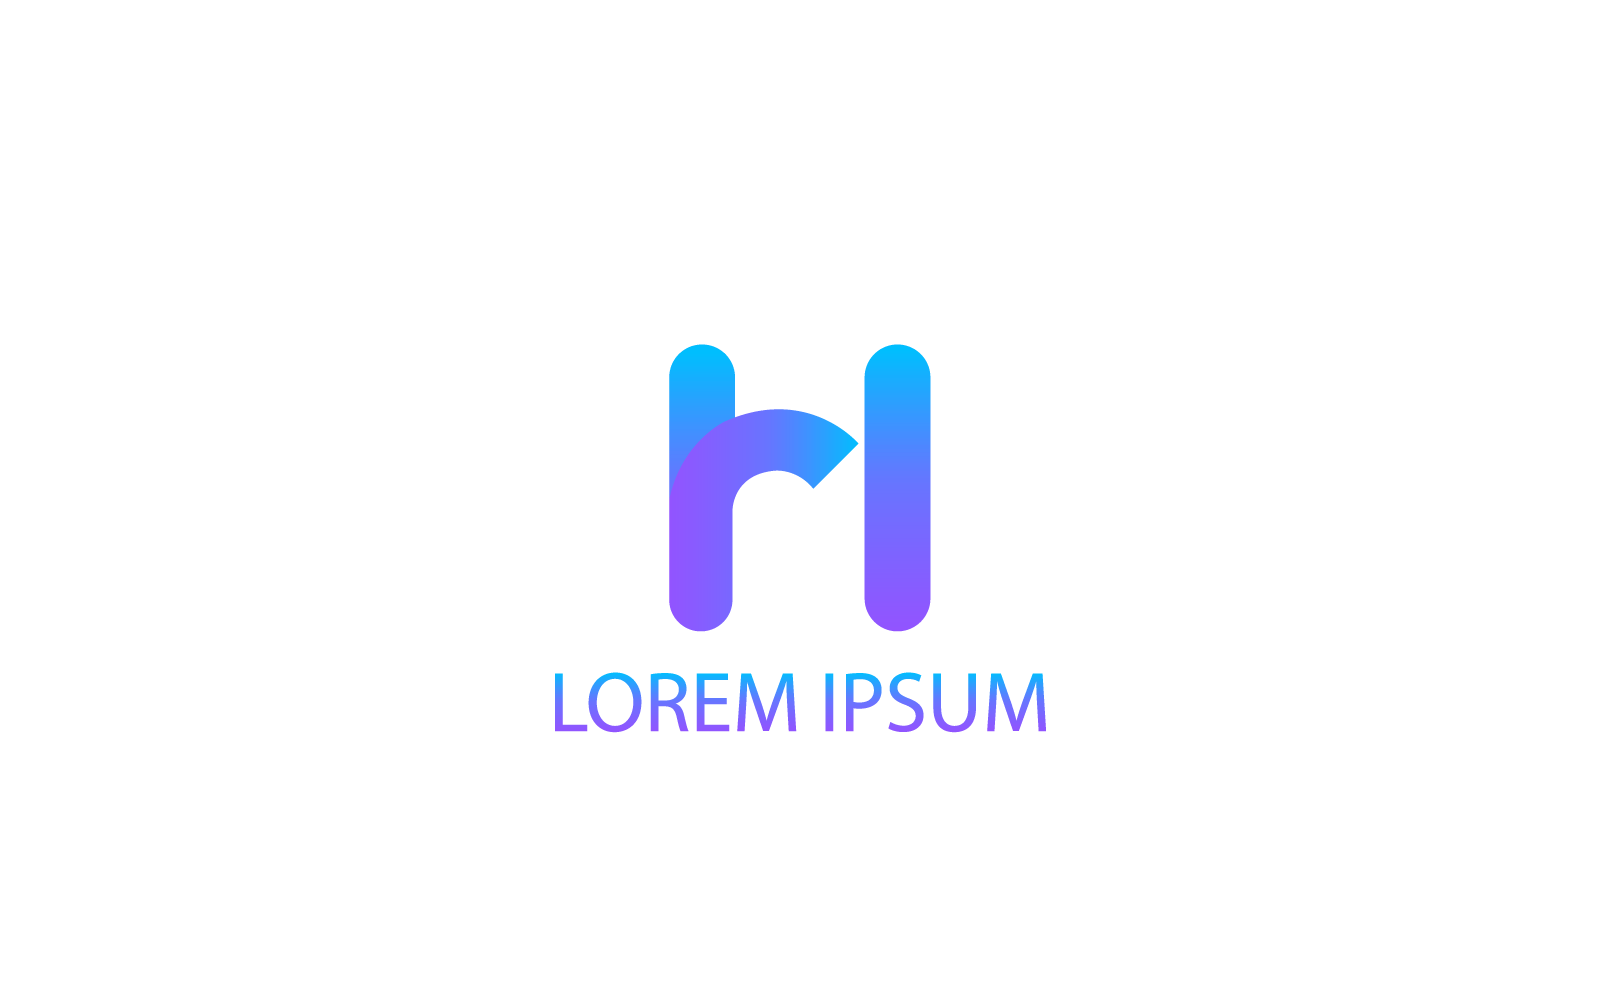 Création de logo Hr minimaliste moderne